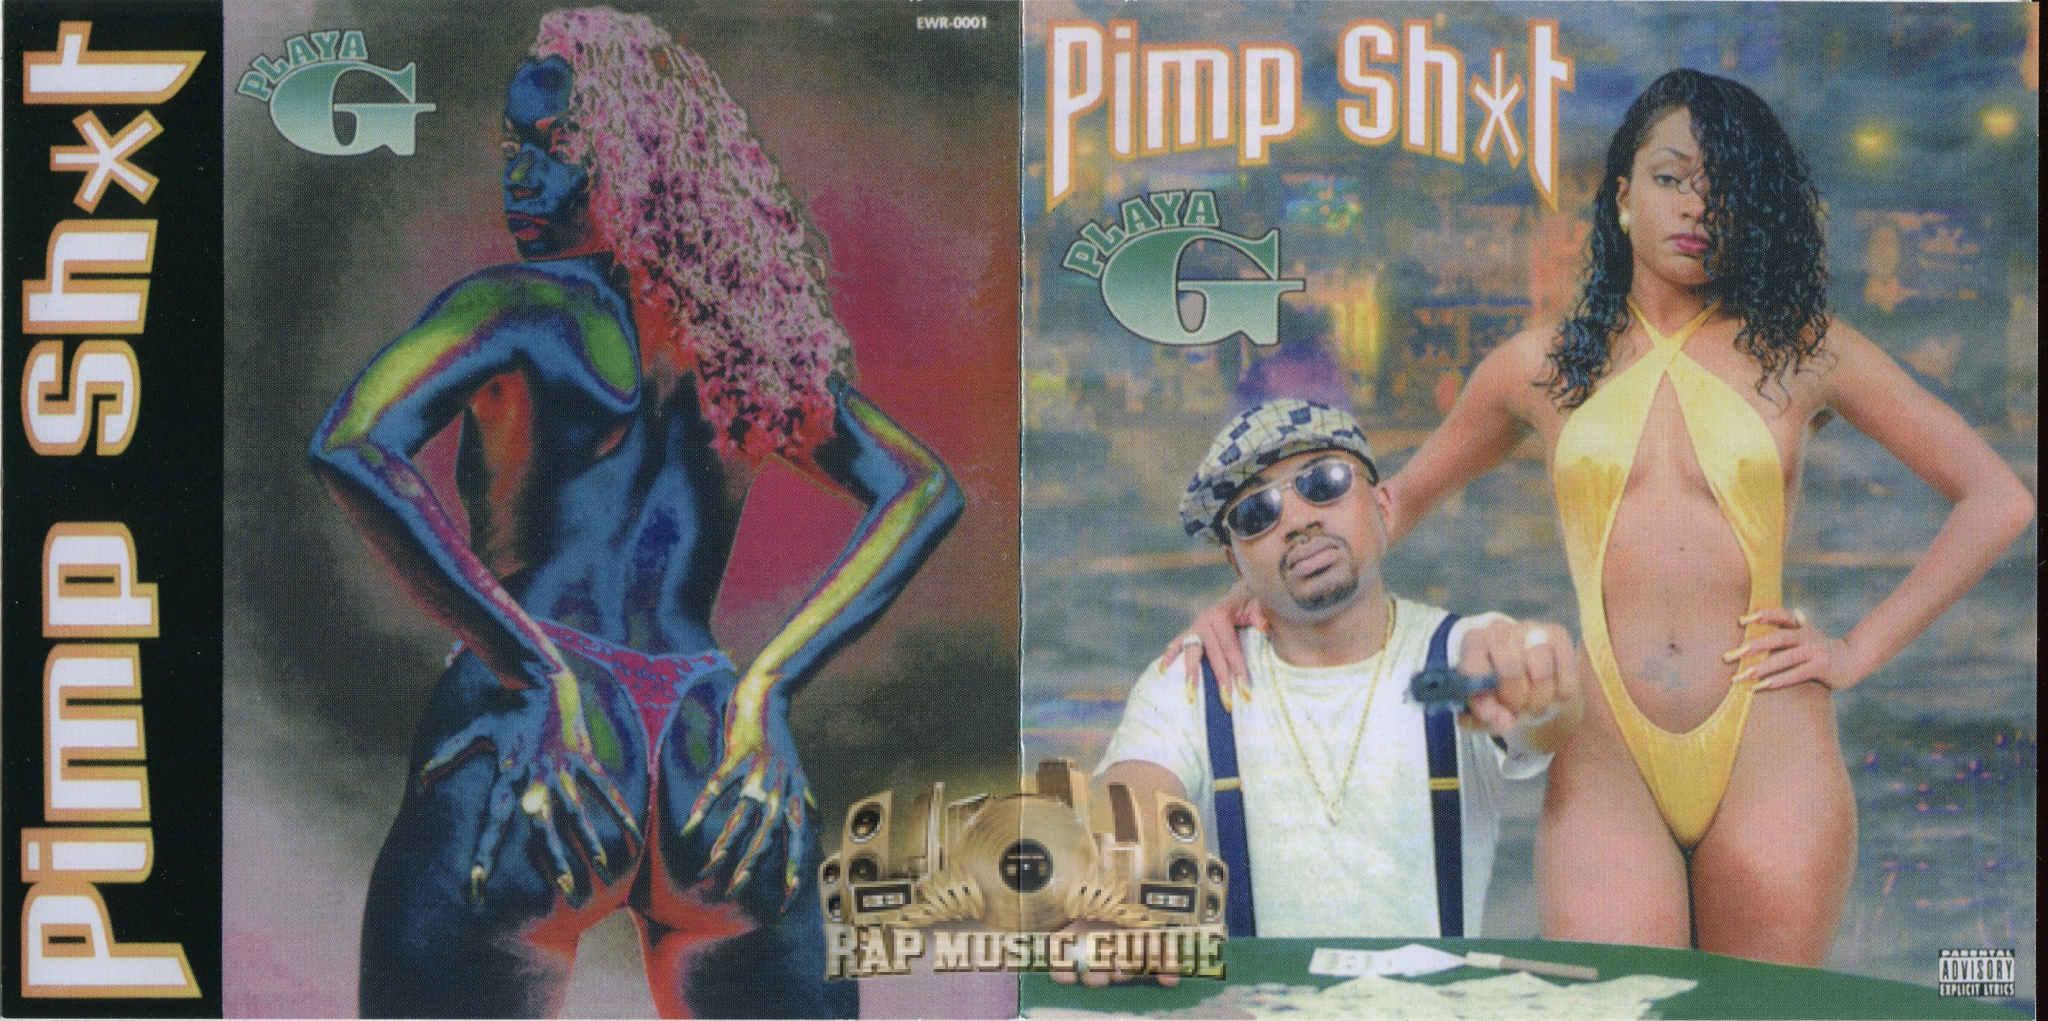 Playa G - Pimp Shit: Re-Release. CD | Rap Music Guide